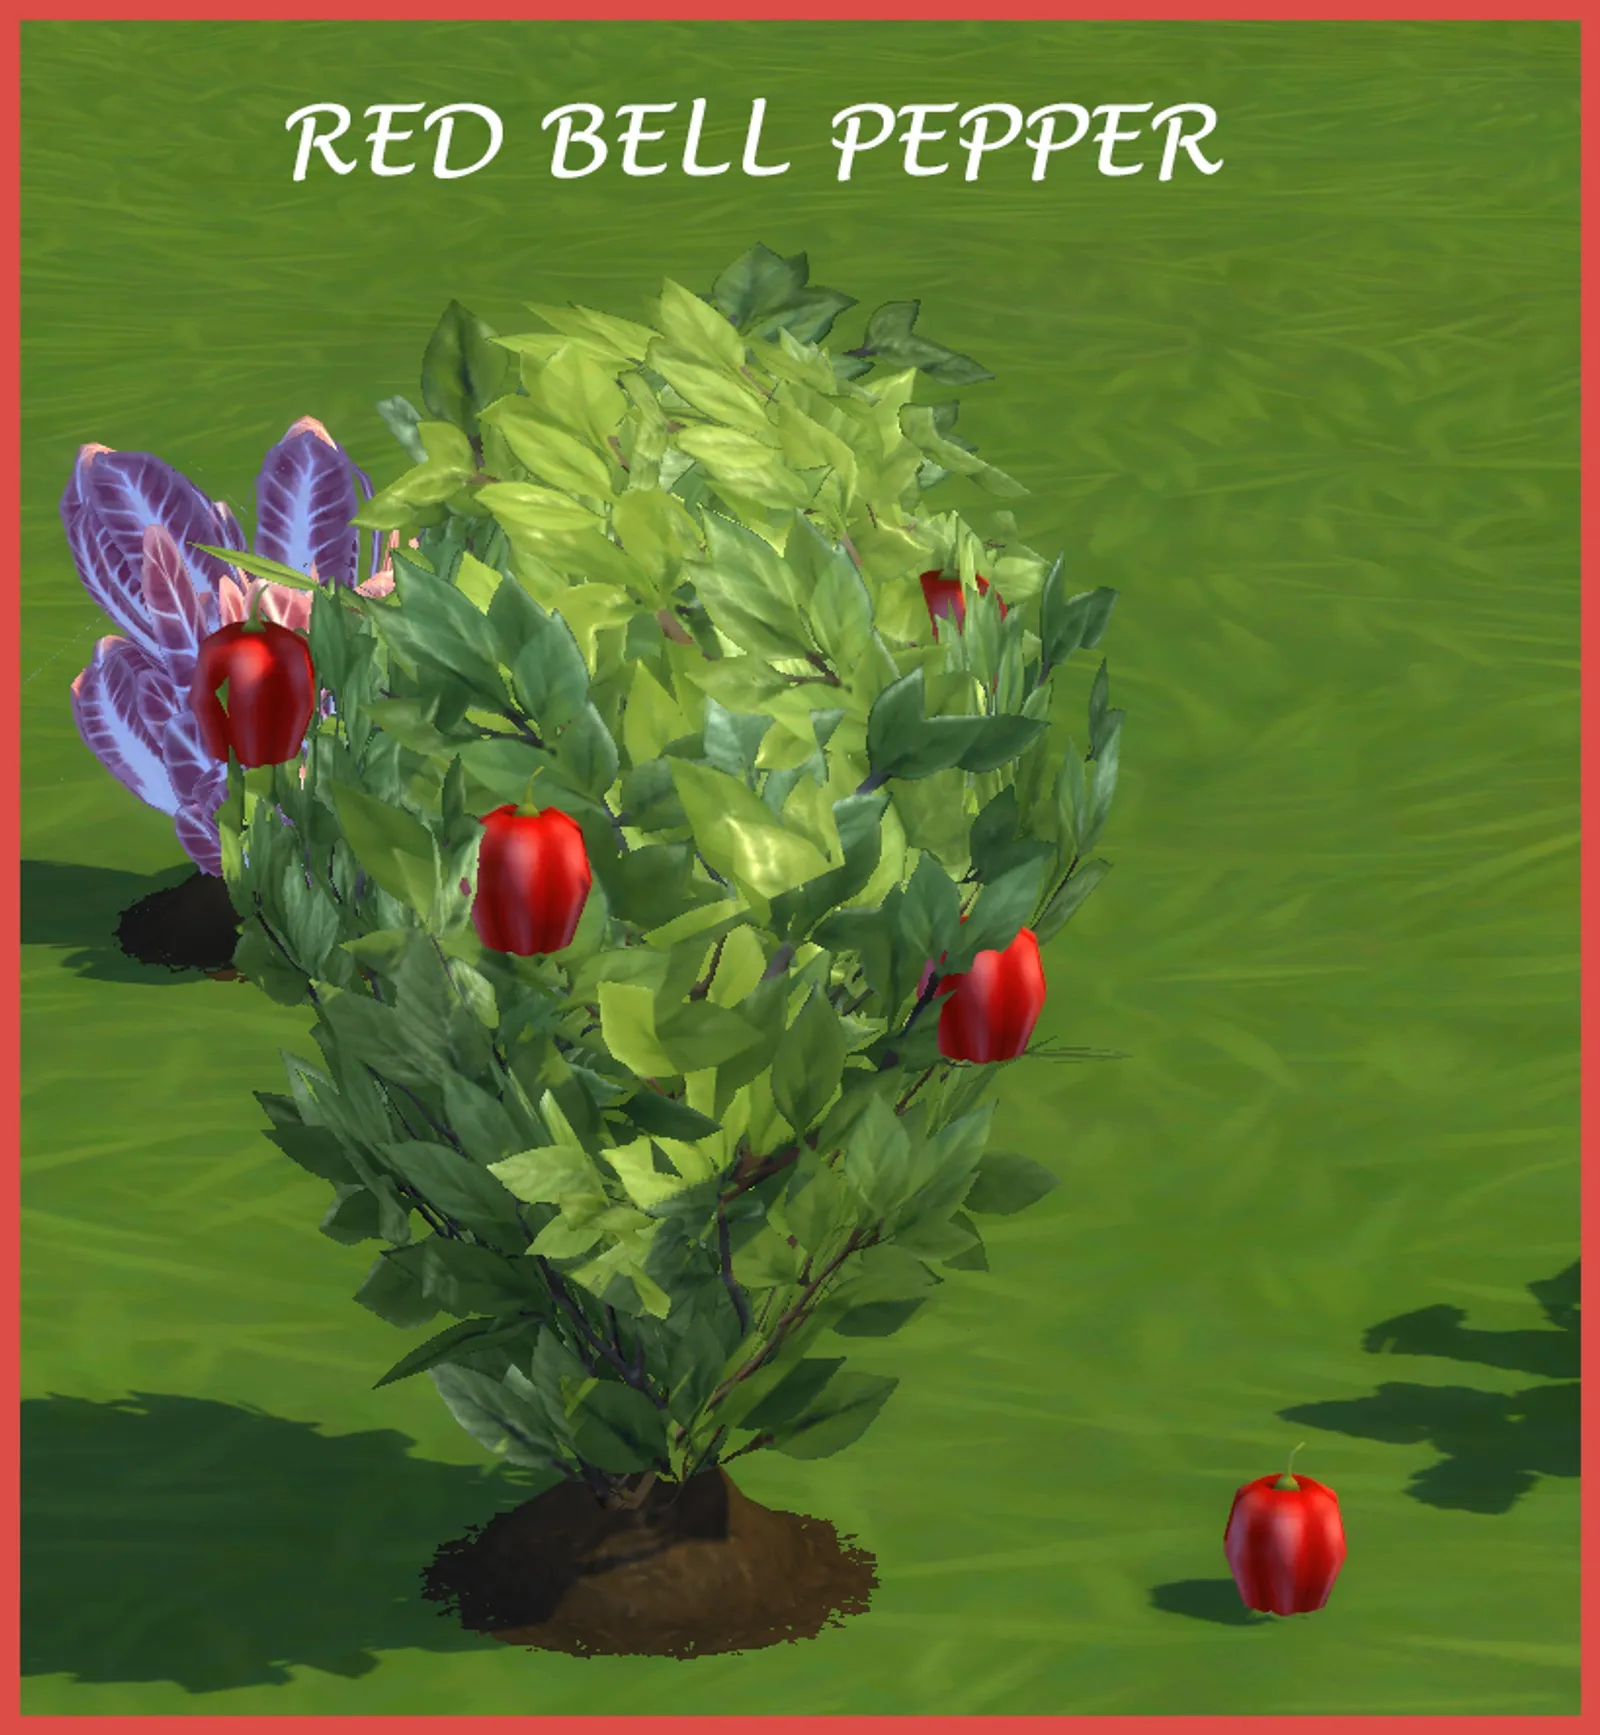 RED BELL PEPPER